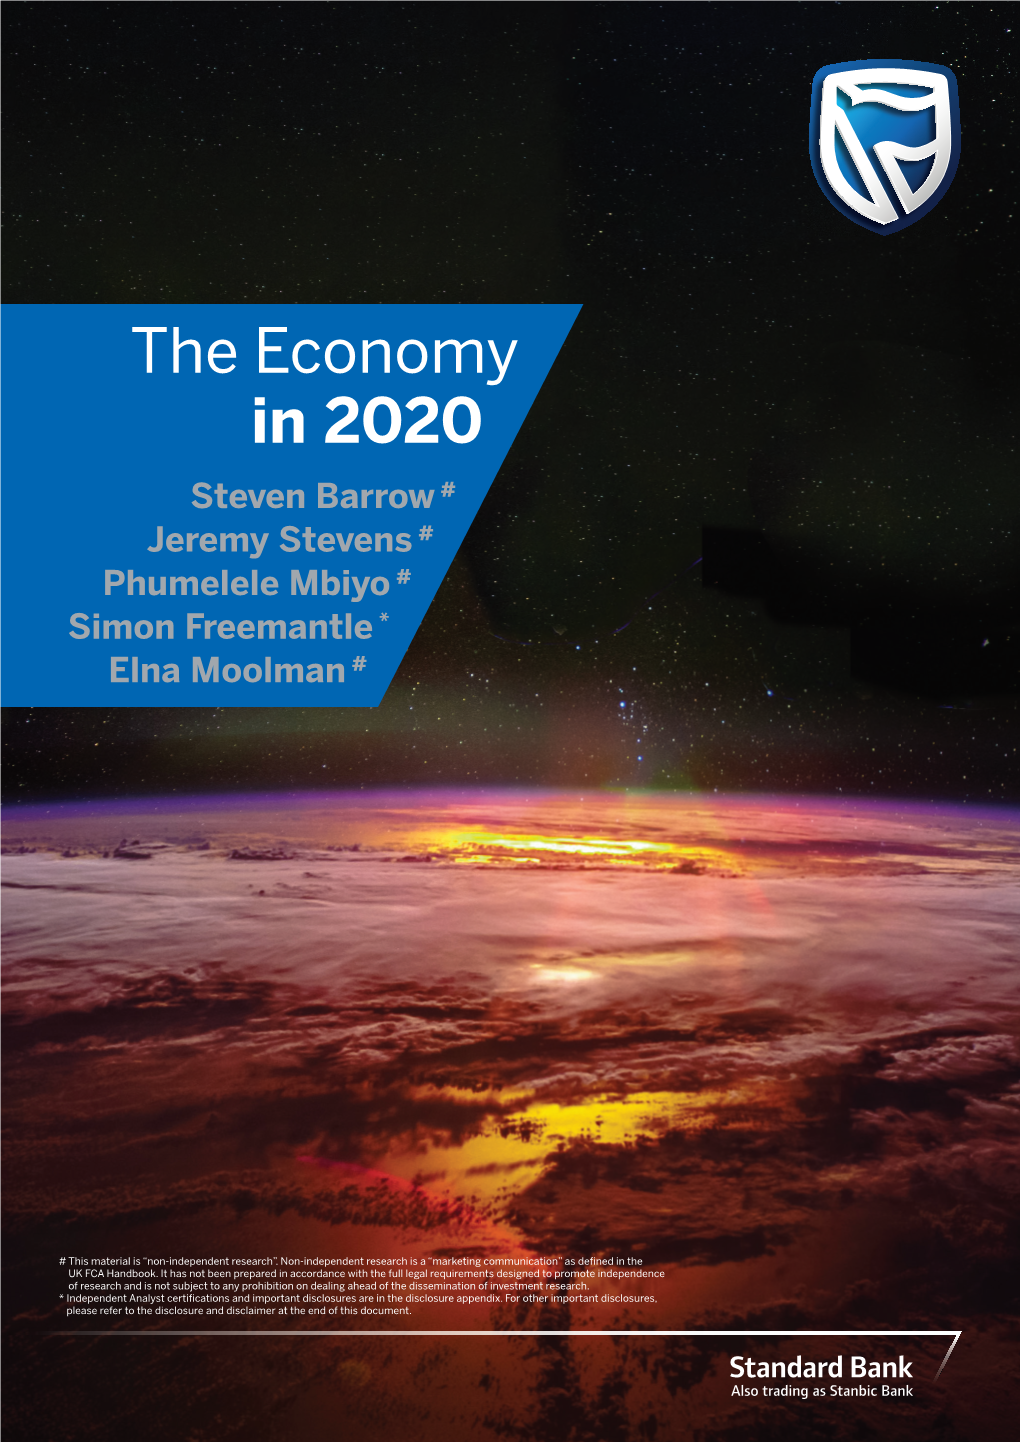 The Economy in 2020 Steven Barrow # Jeremy Stevens # Phumelele Mbiyo # Simon Freemantle * Elna Moolman